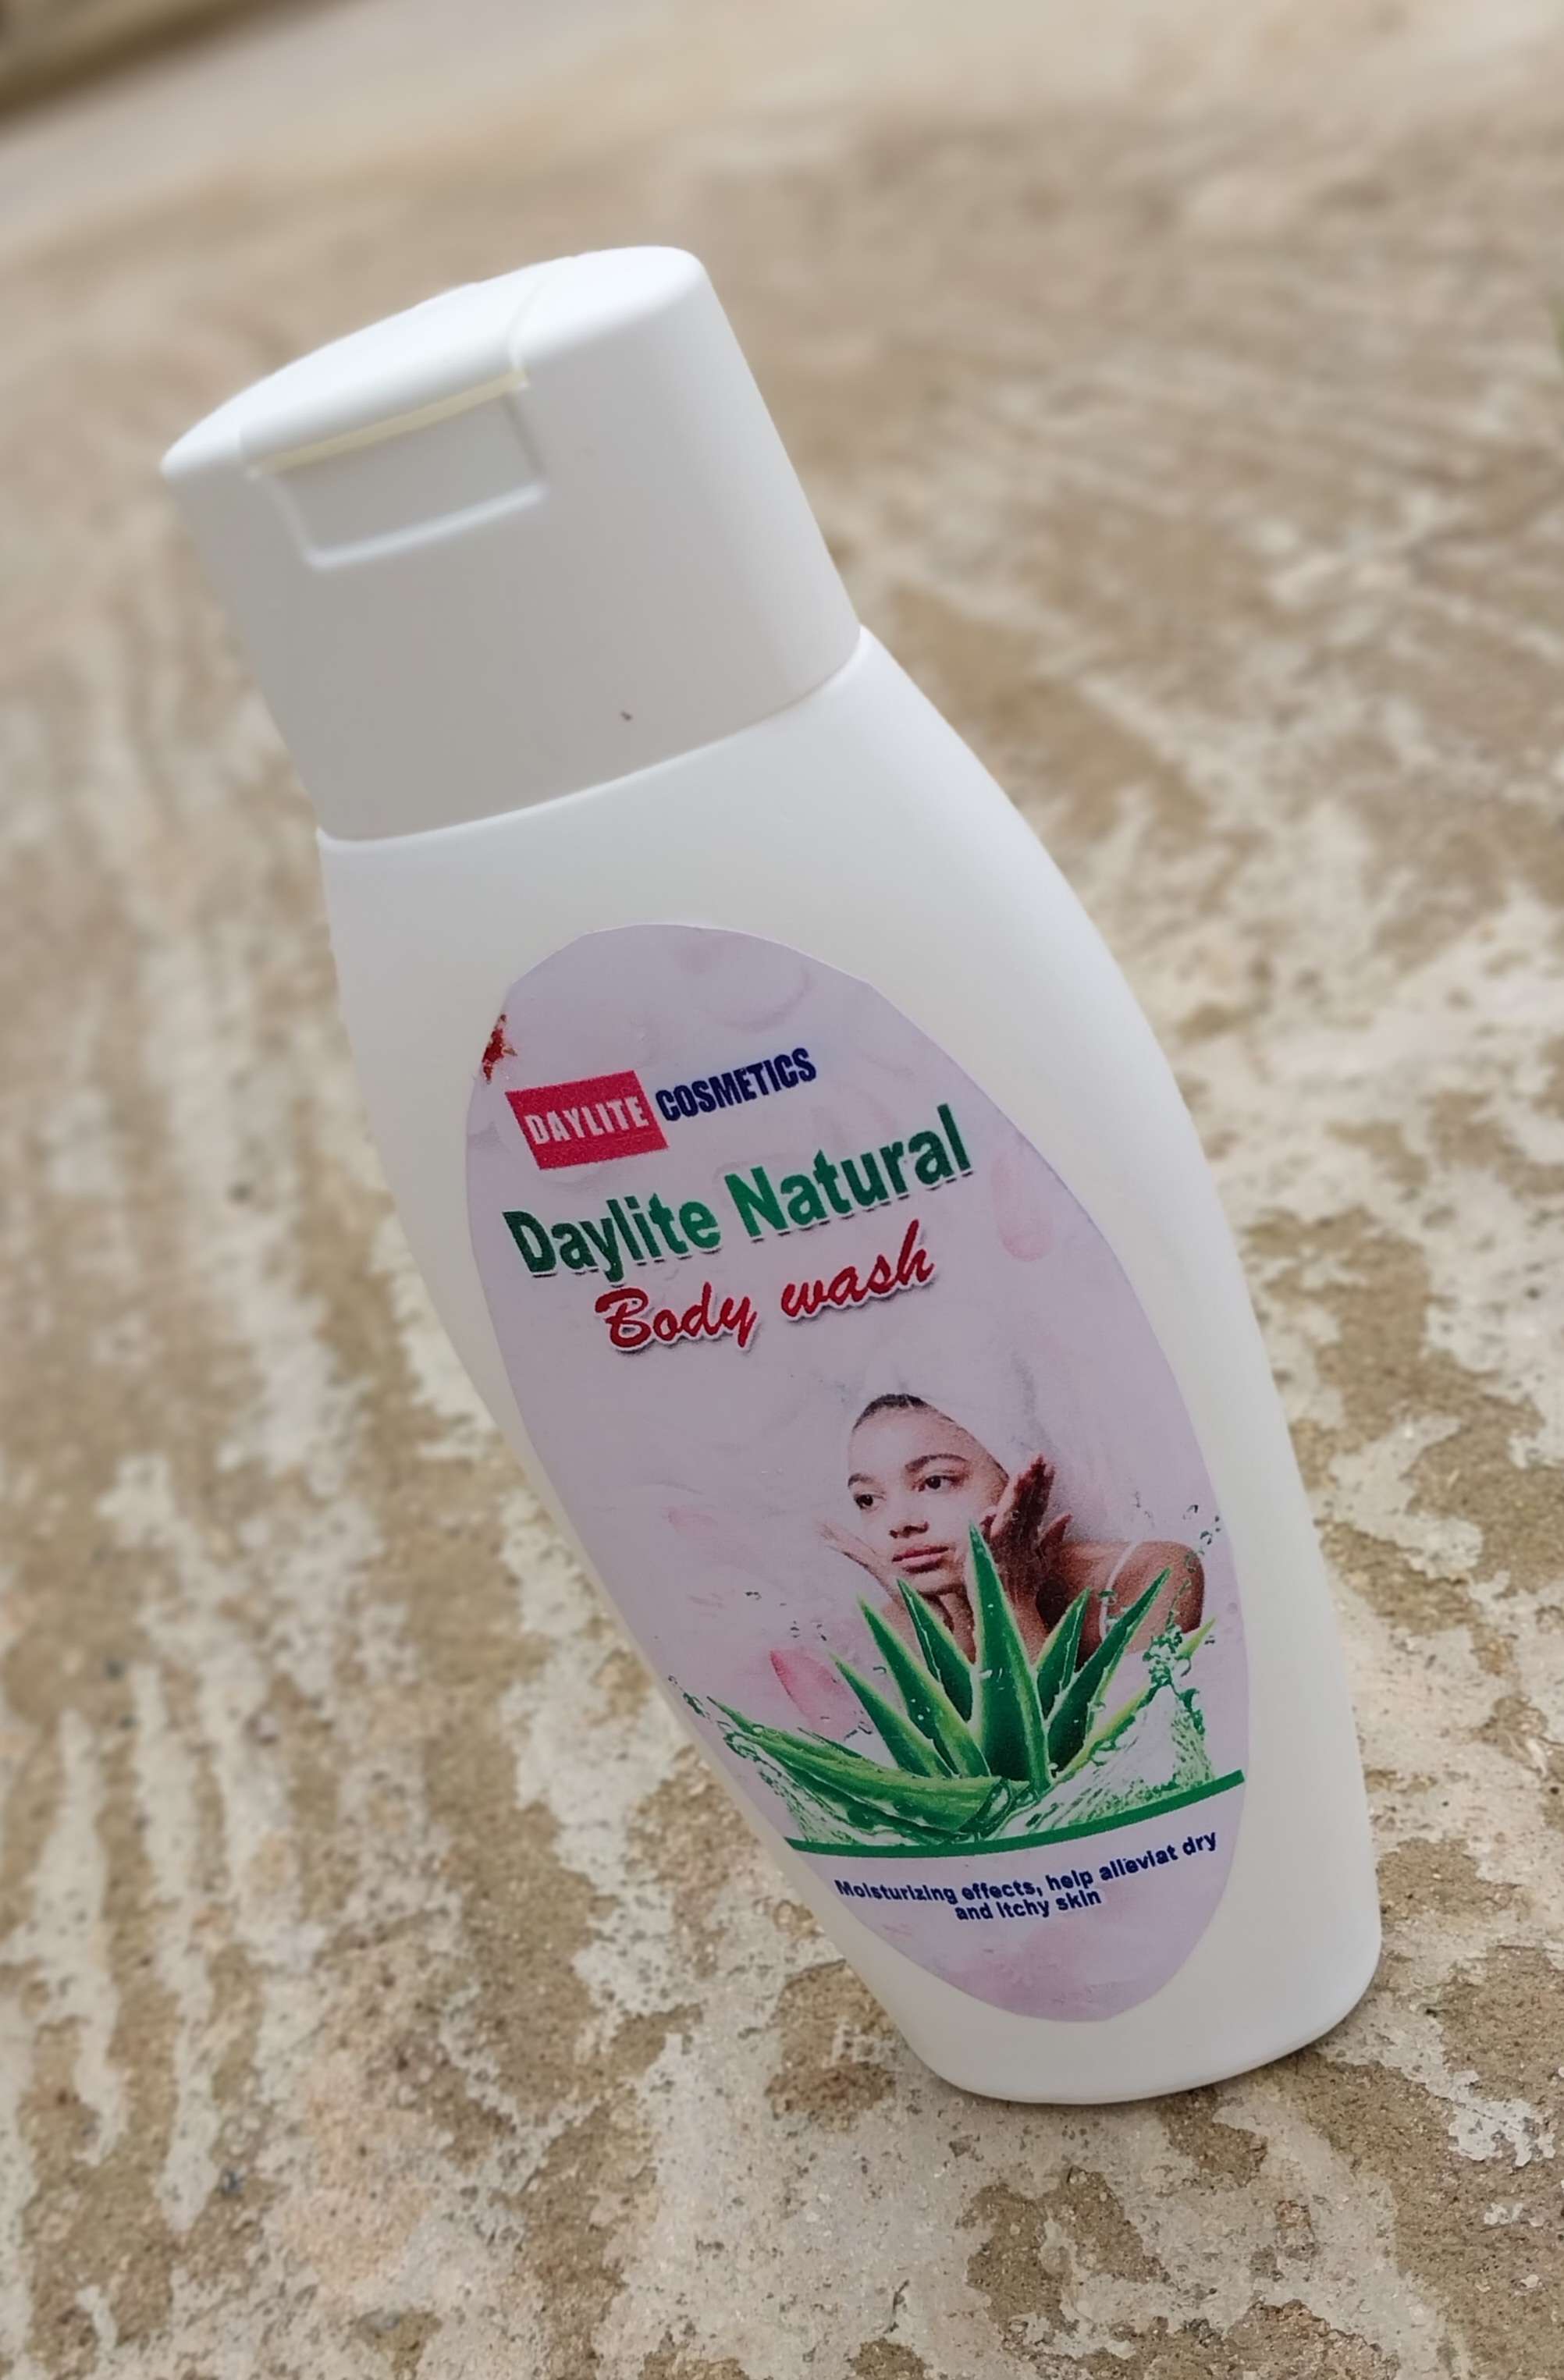 Daylite Natural Body Wash